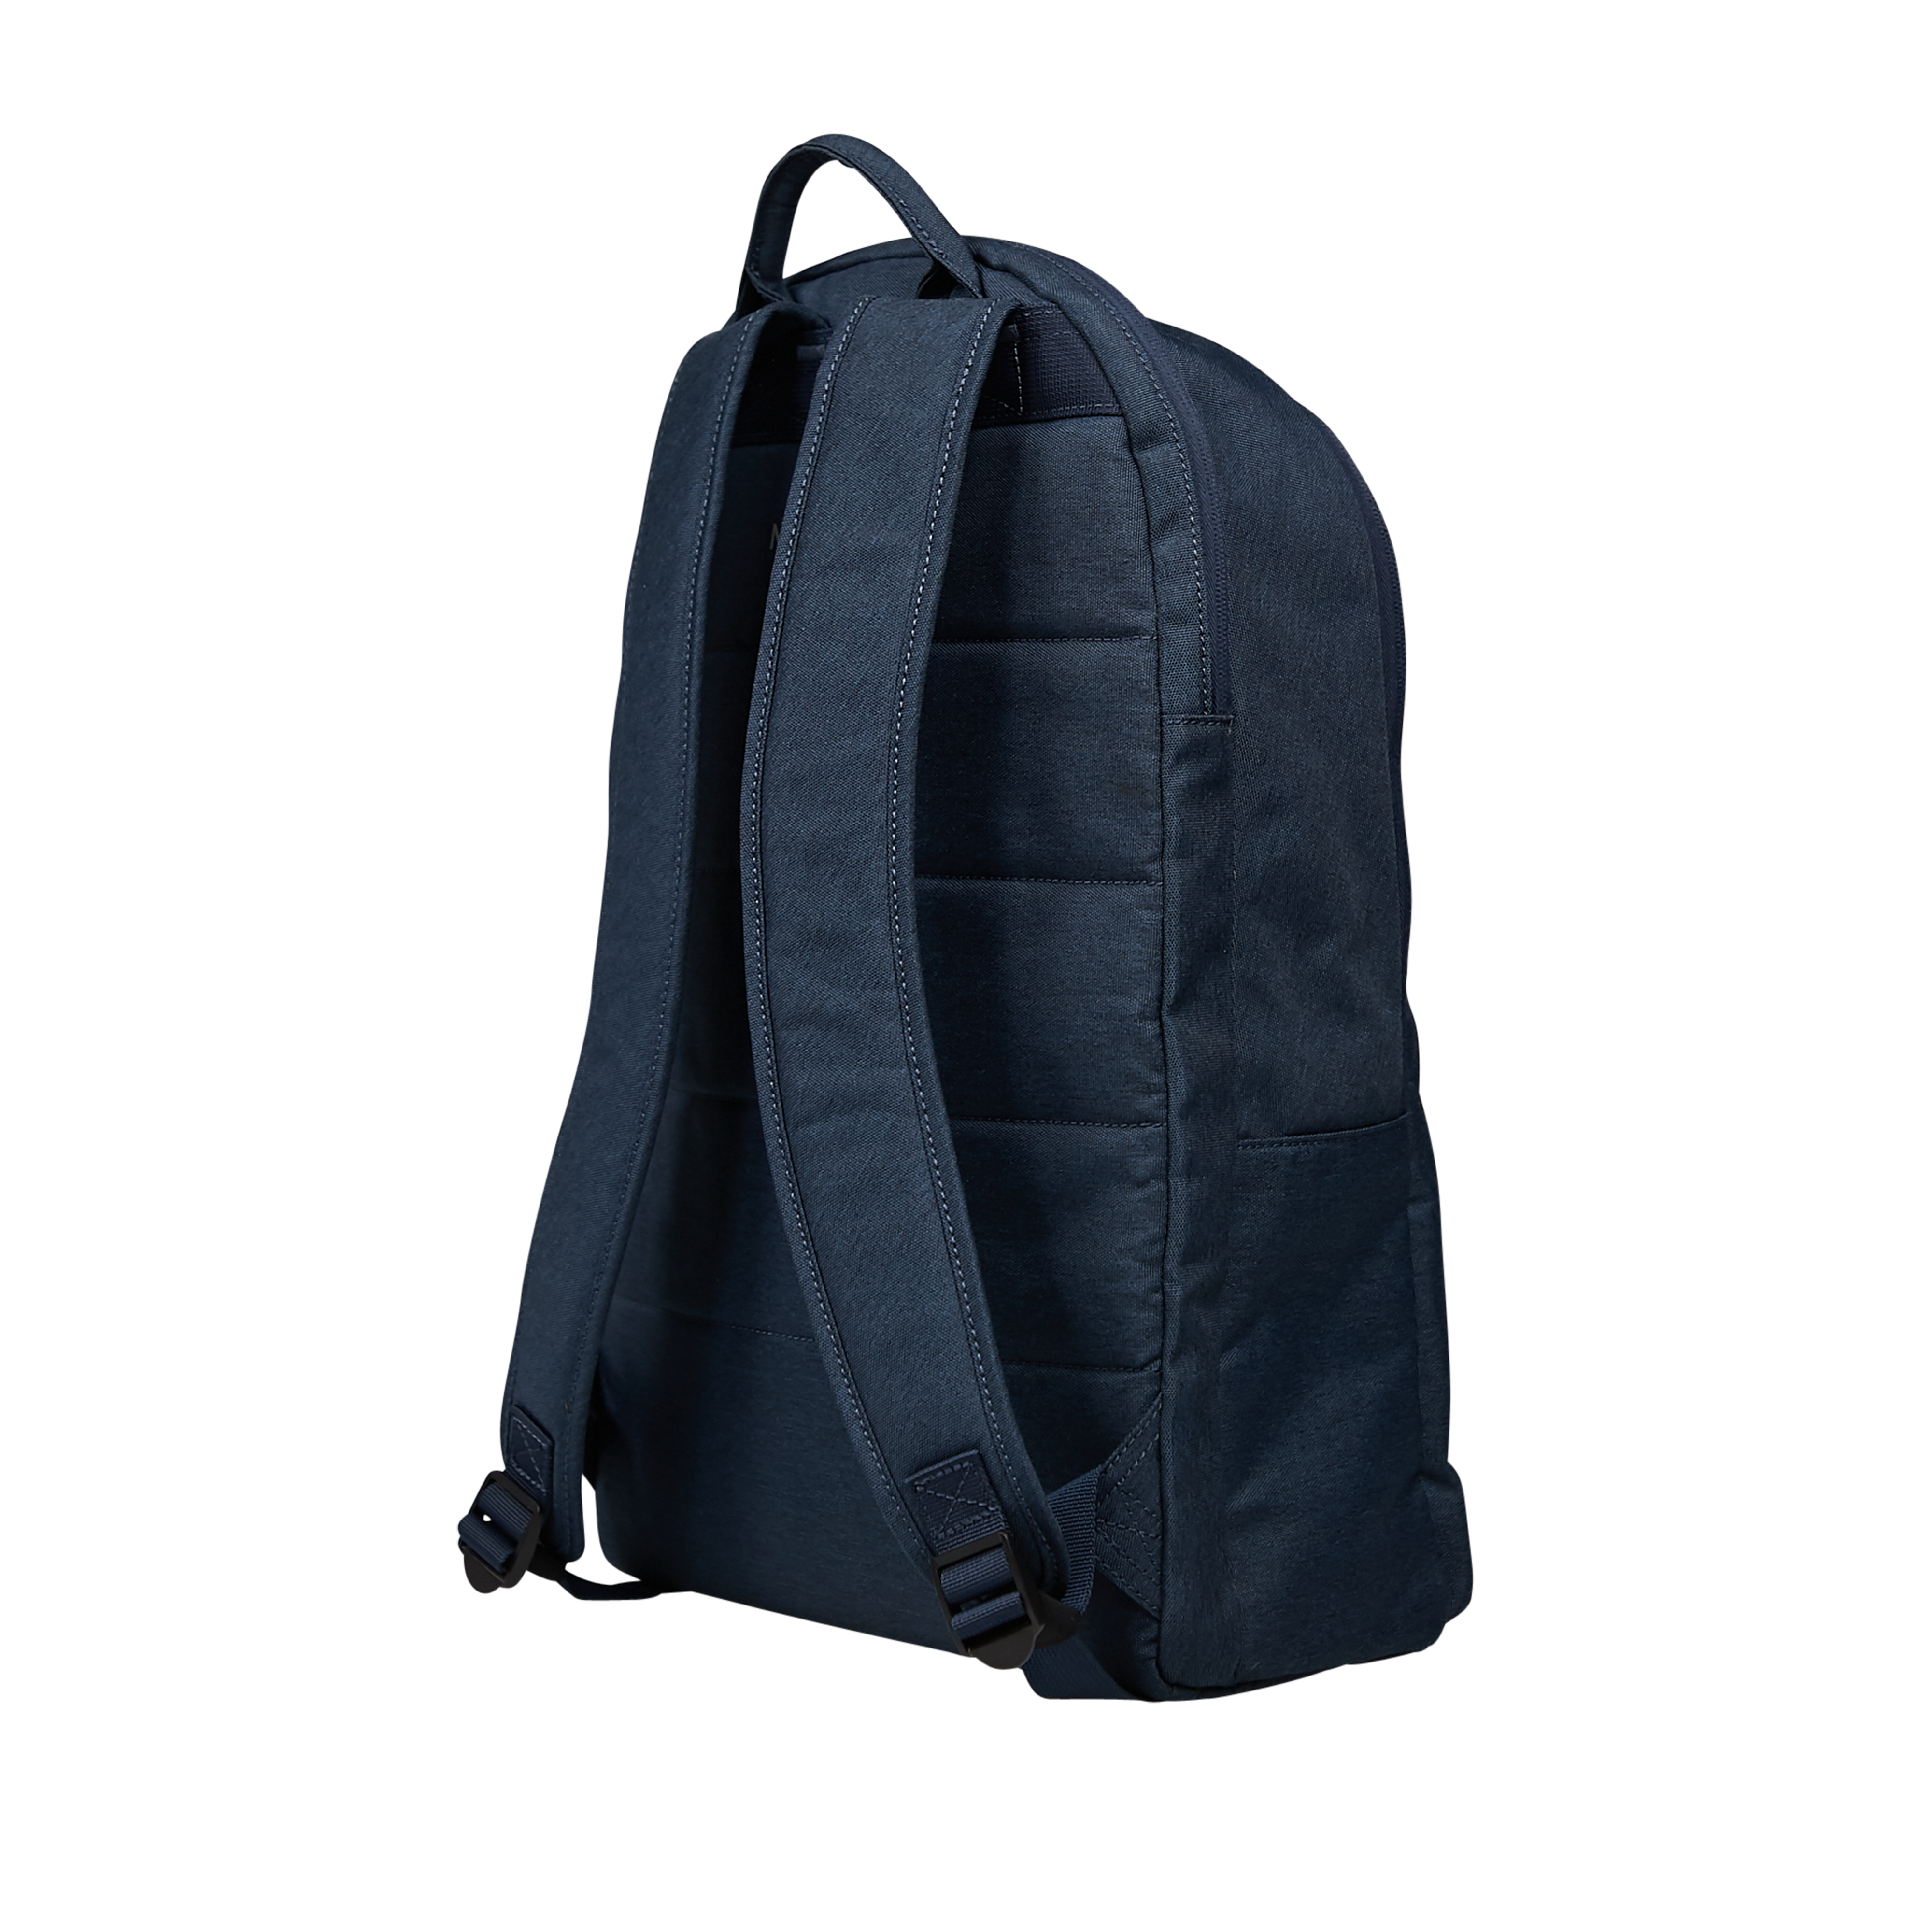 Ahjo Backpack